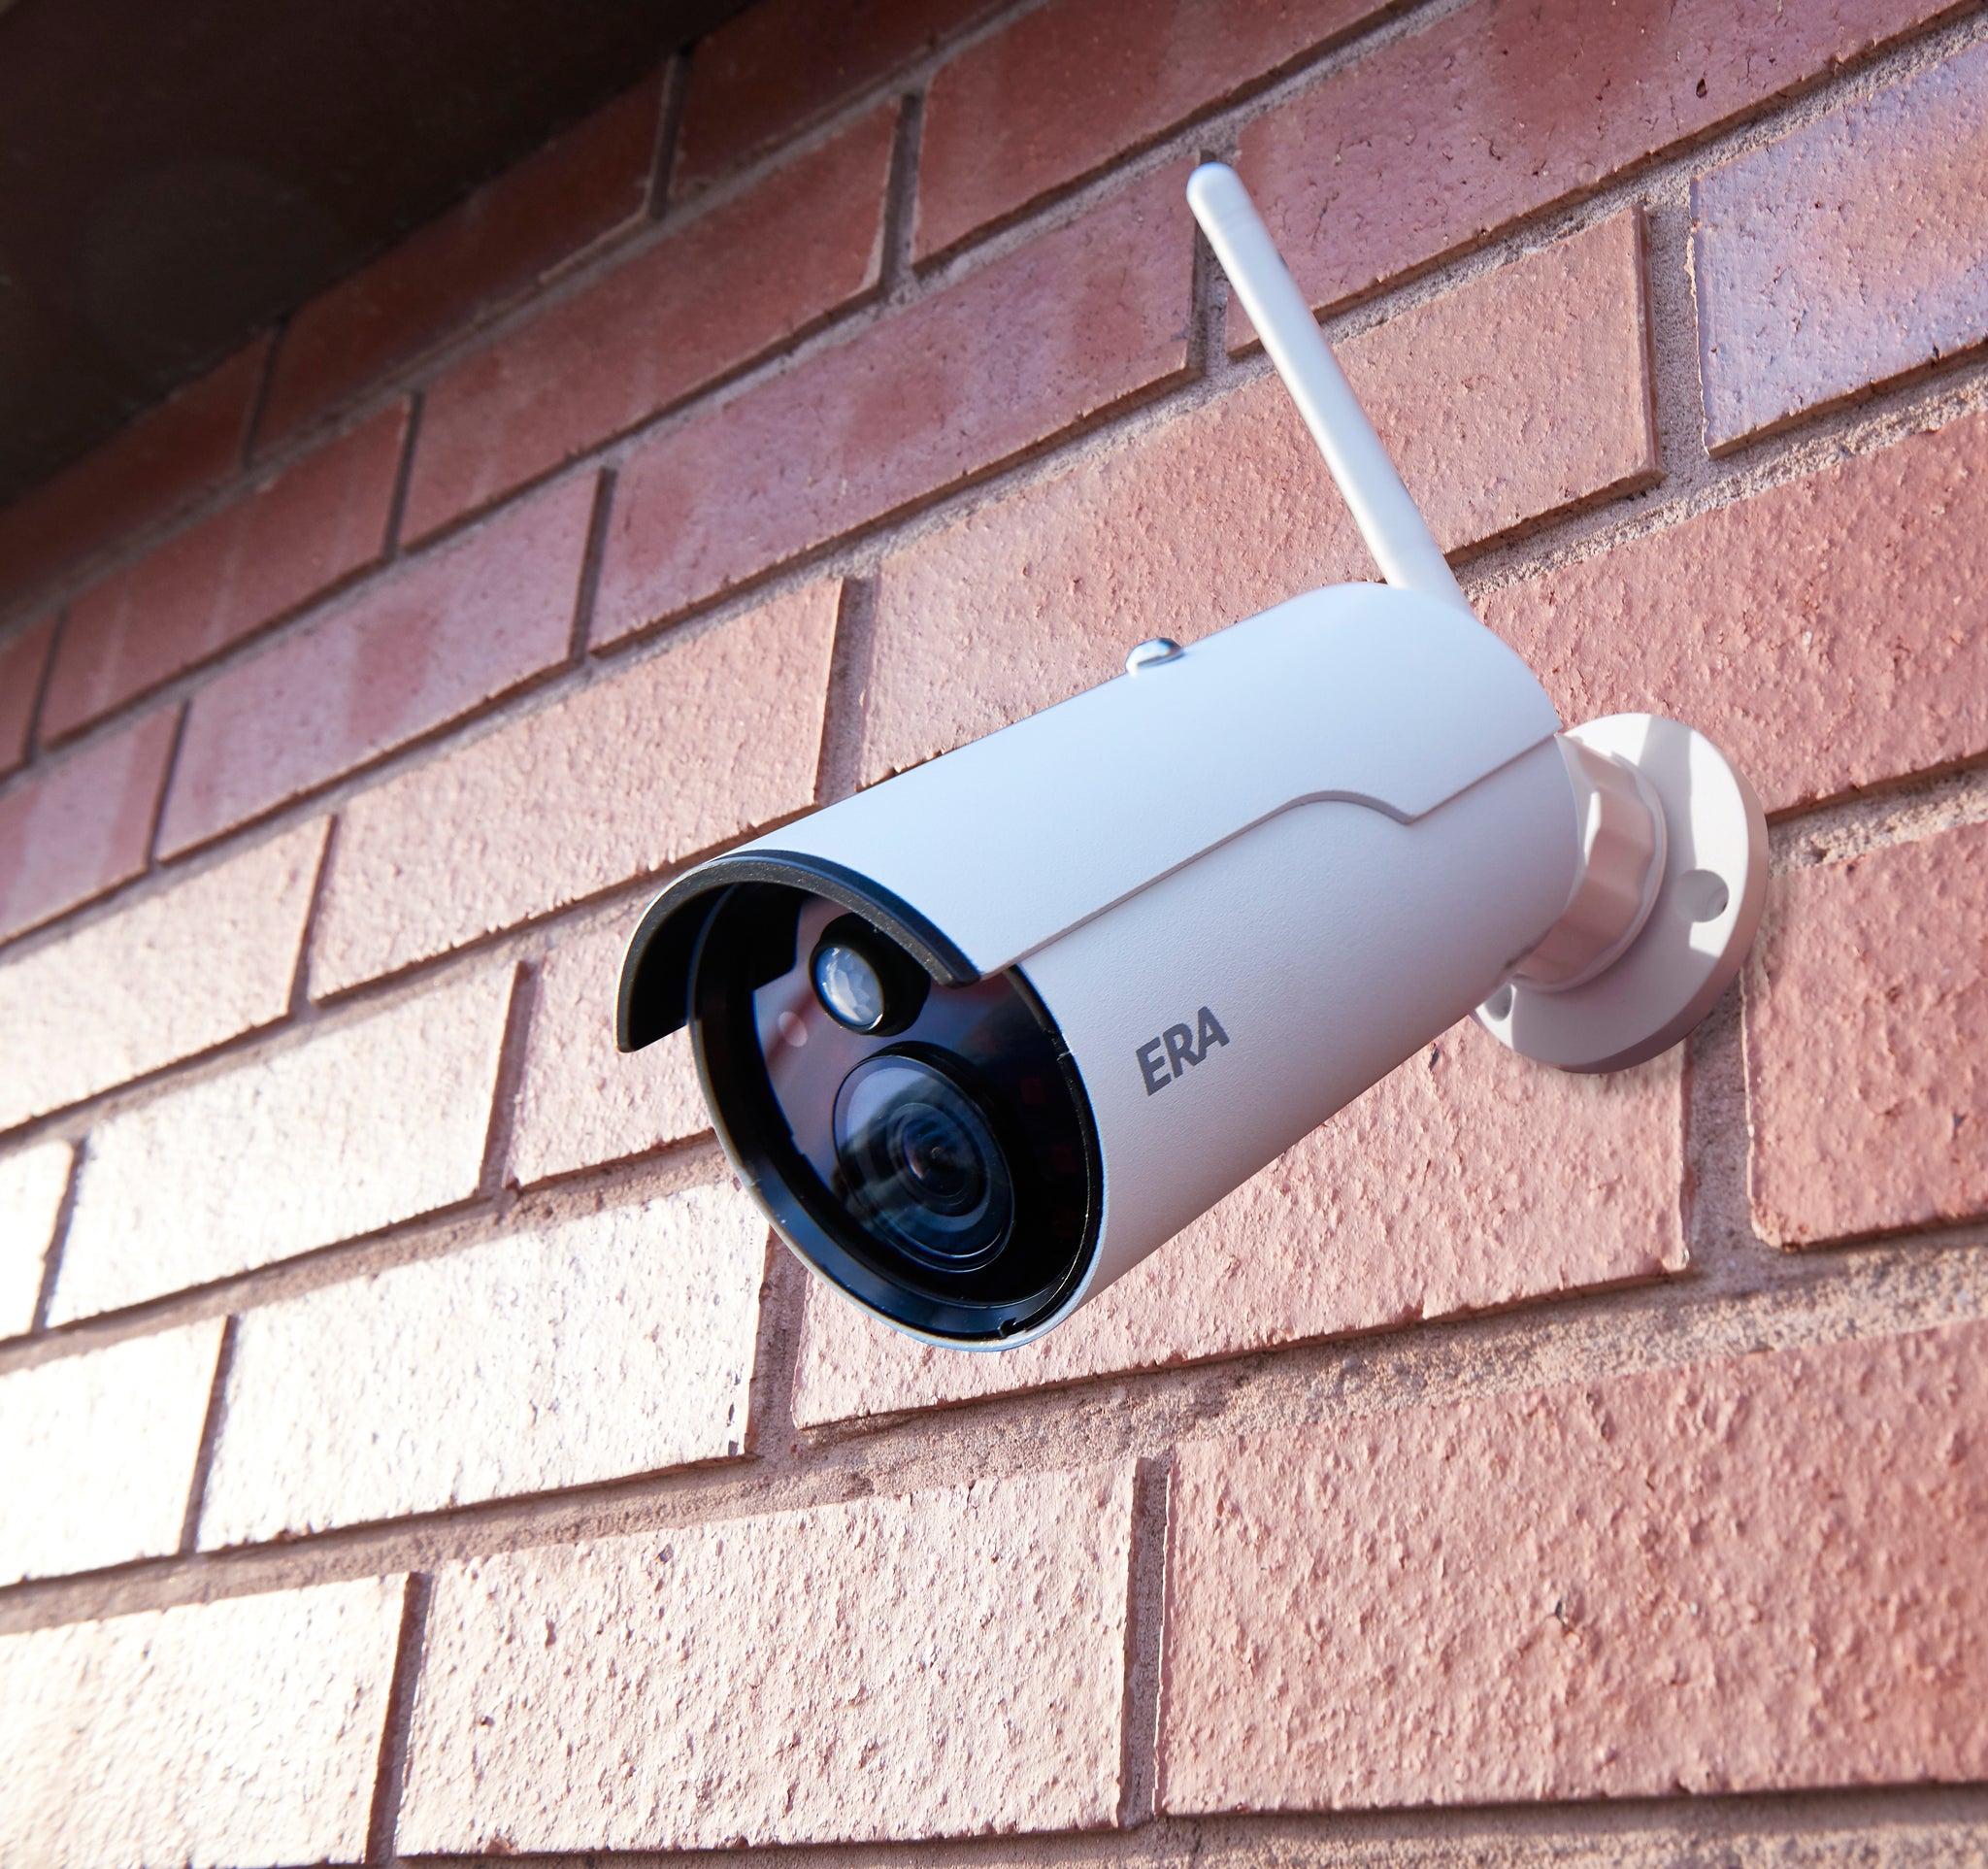 Wireless Outdoor Security Camera – ERA Protect